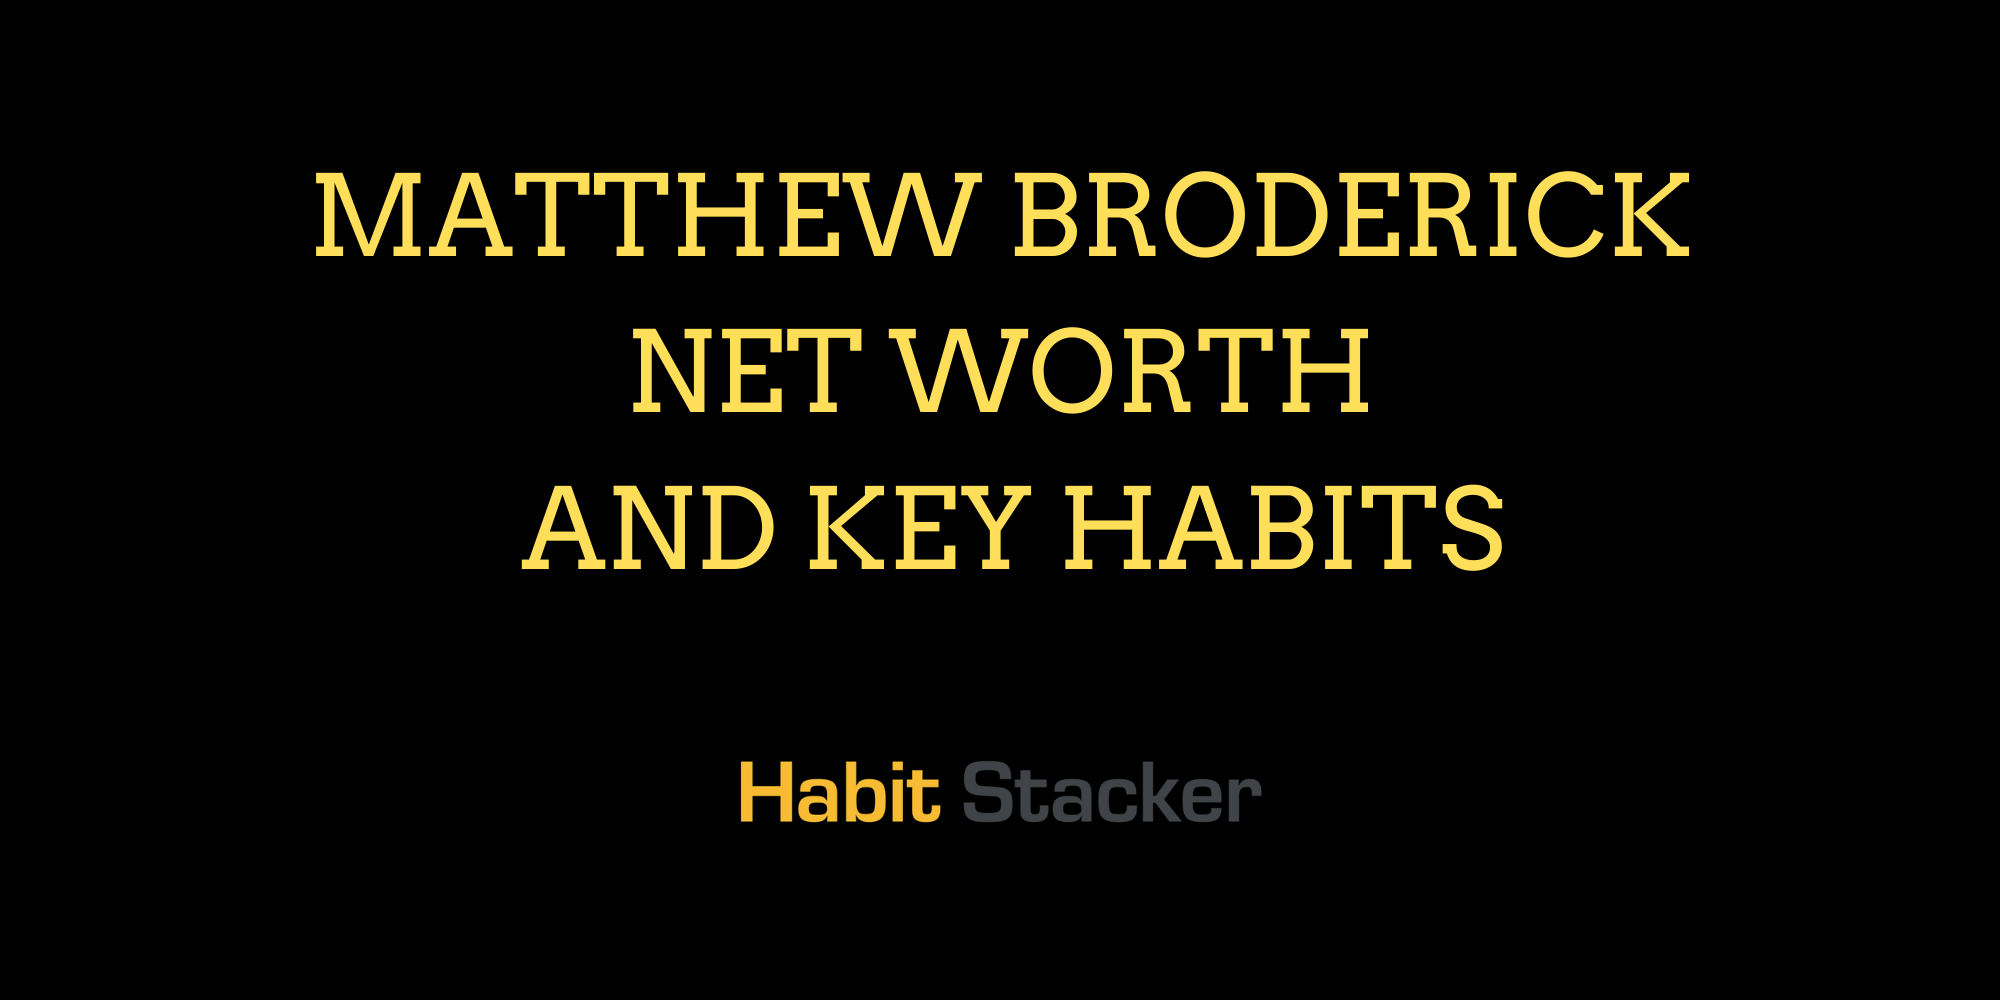 Matthew Broderick Net Worth and Key Habits